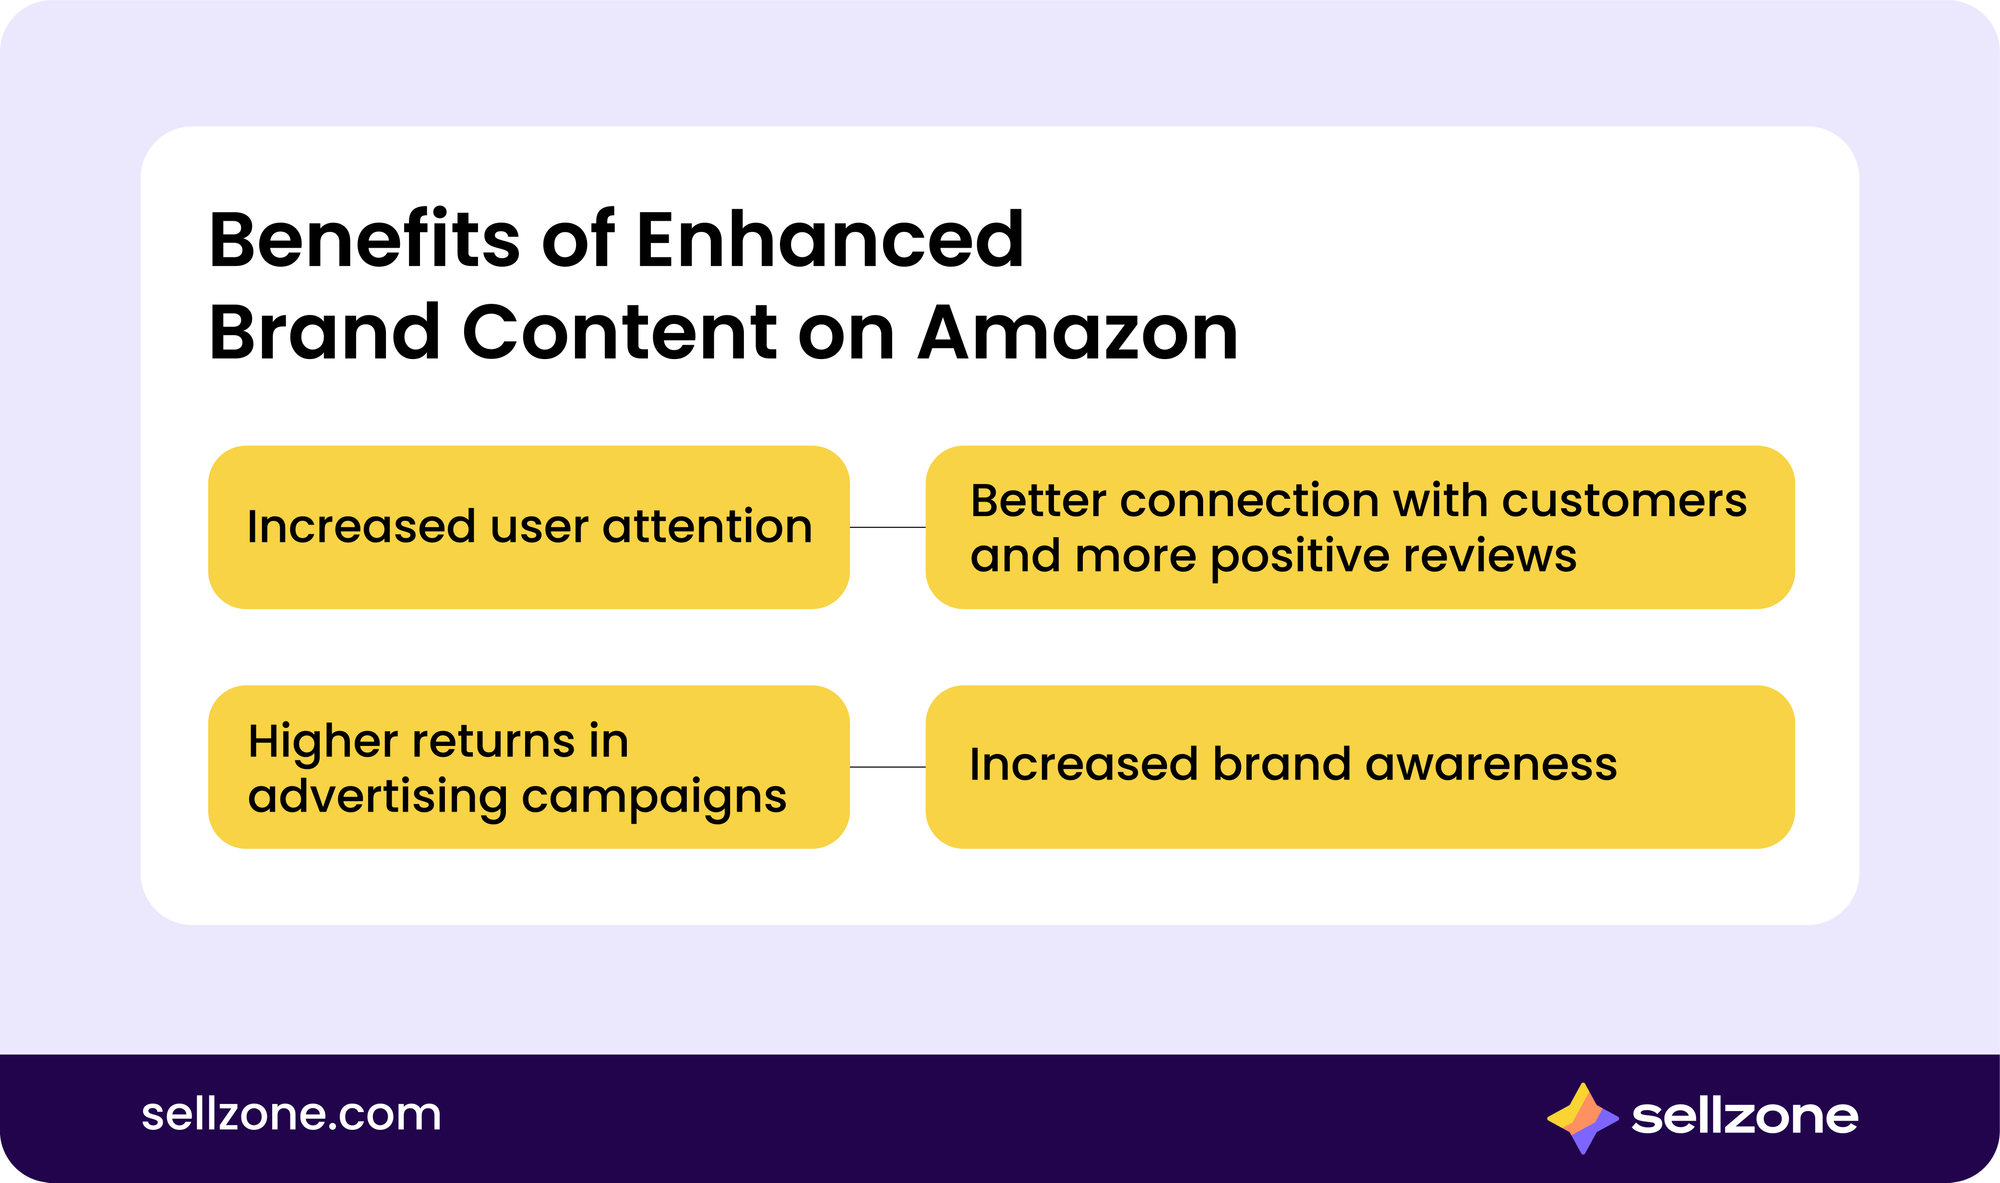 Benefits of using Enhanced Brand Content